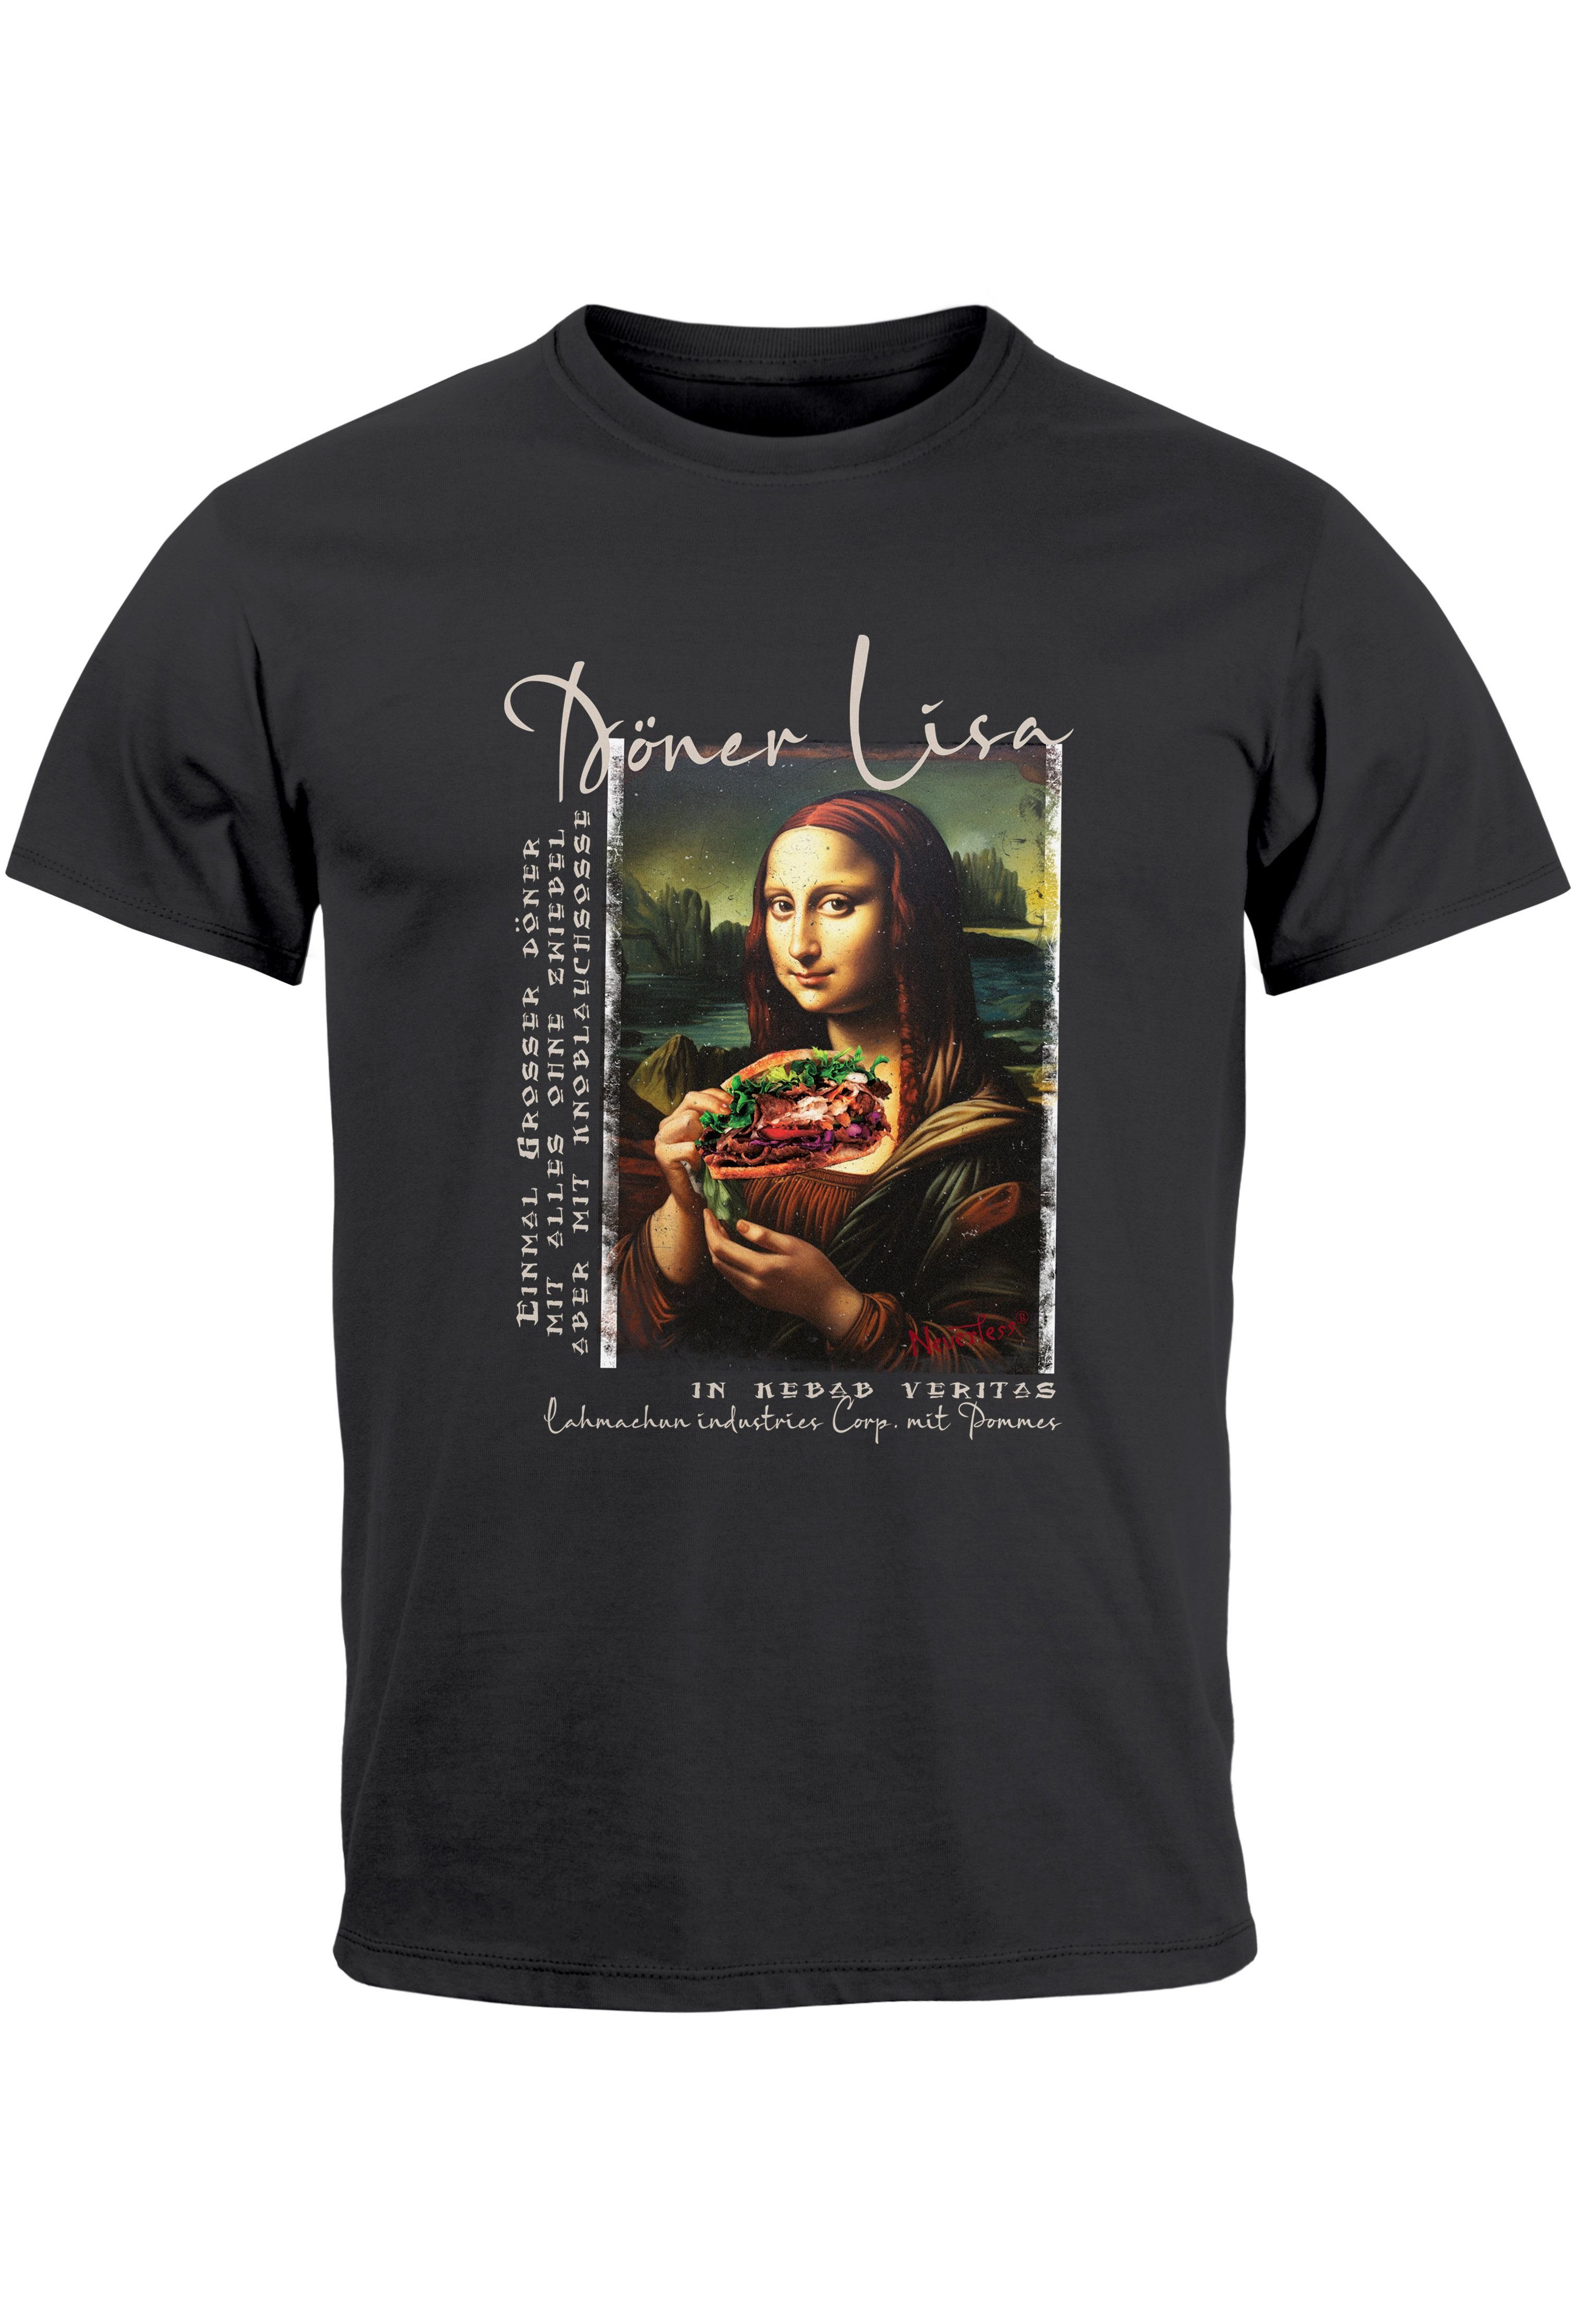 MoonWorks Print-Shirt Herren T-Shirt Print Aufdruck Mona Lisa Parodie Meme Kapuzen-Pullover mit Print Döner Lisa anthrazit